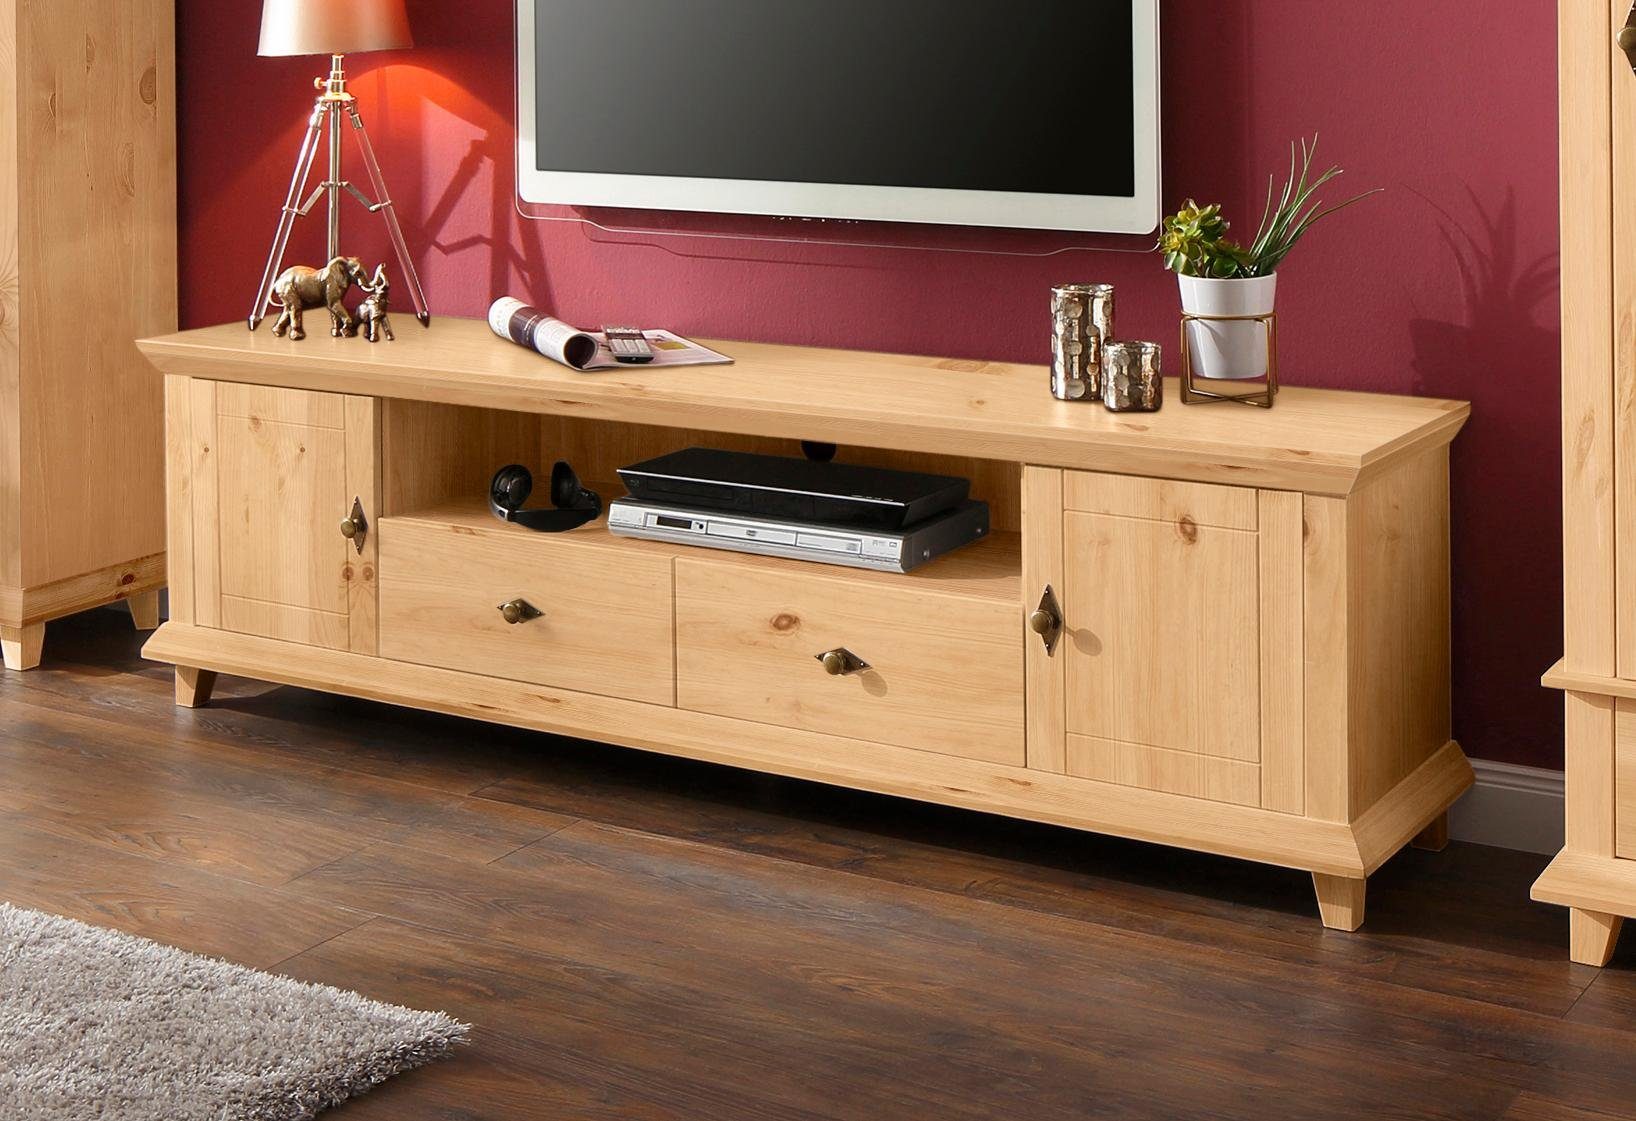 Otto - Home Affaire Home affaire tv-meubel Gali, massief hout, in 2 afmetingen, met praktische snoergeleiding